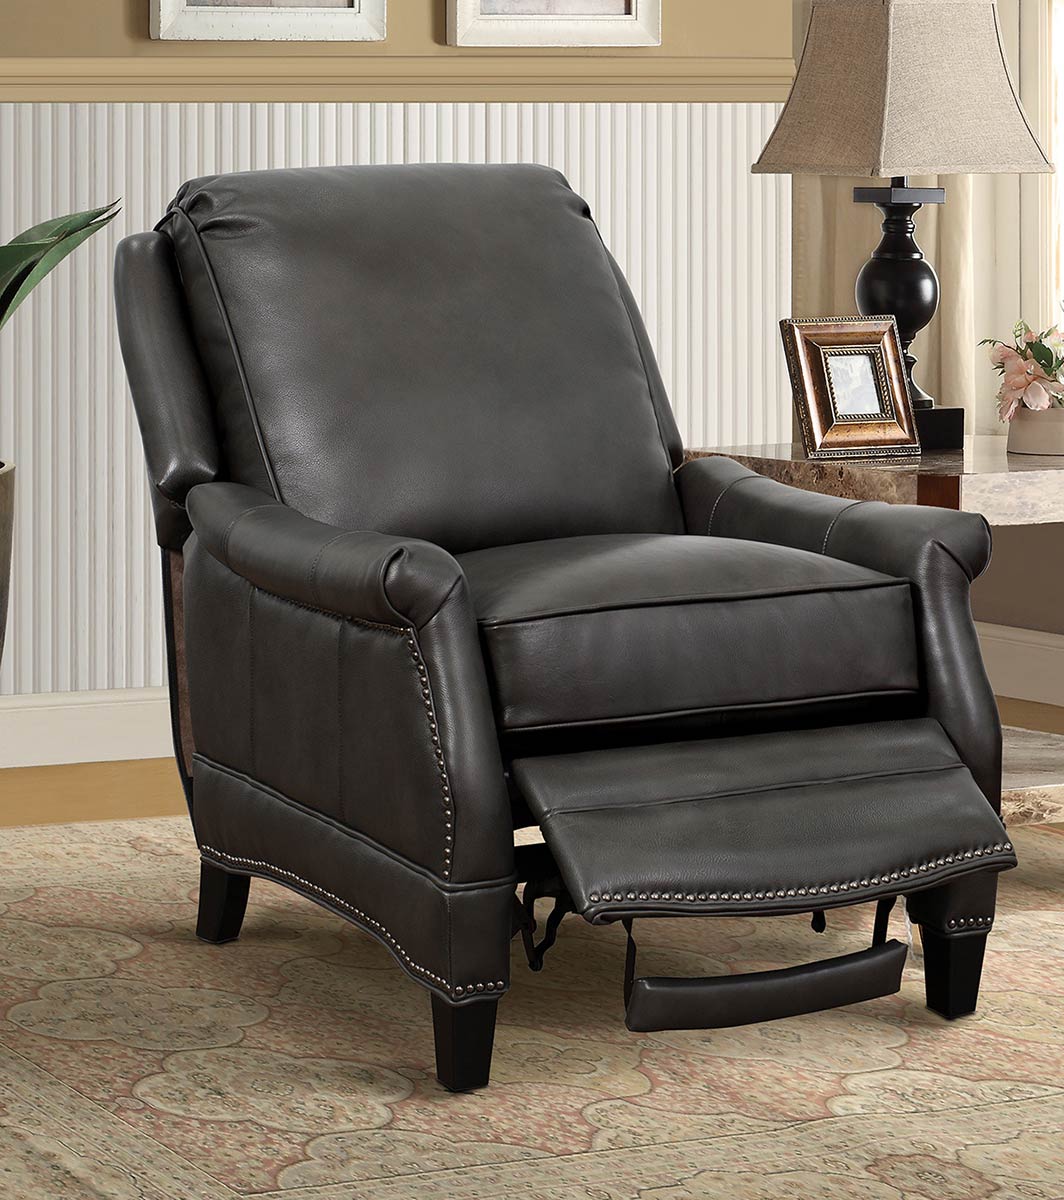 Barcalounger Ashebrooke Recliner Chair - Wrenn Gray/All Leather